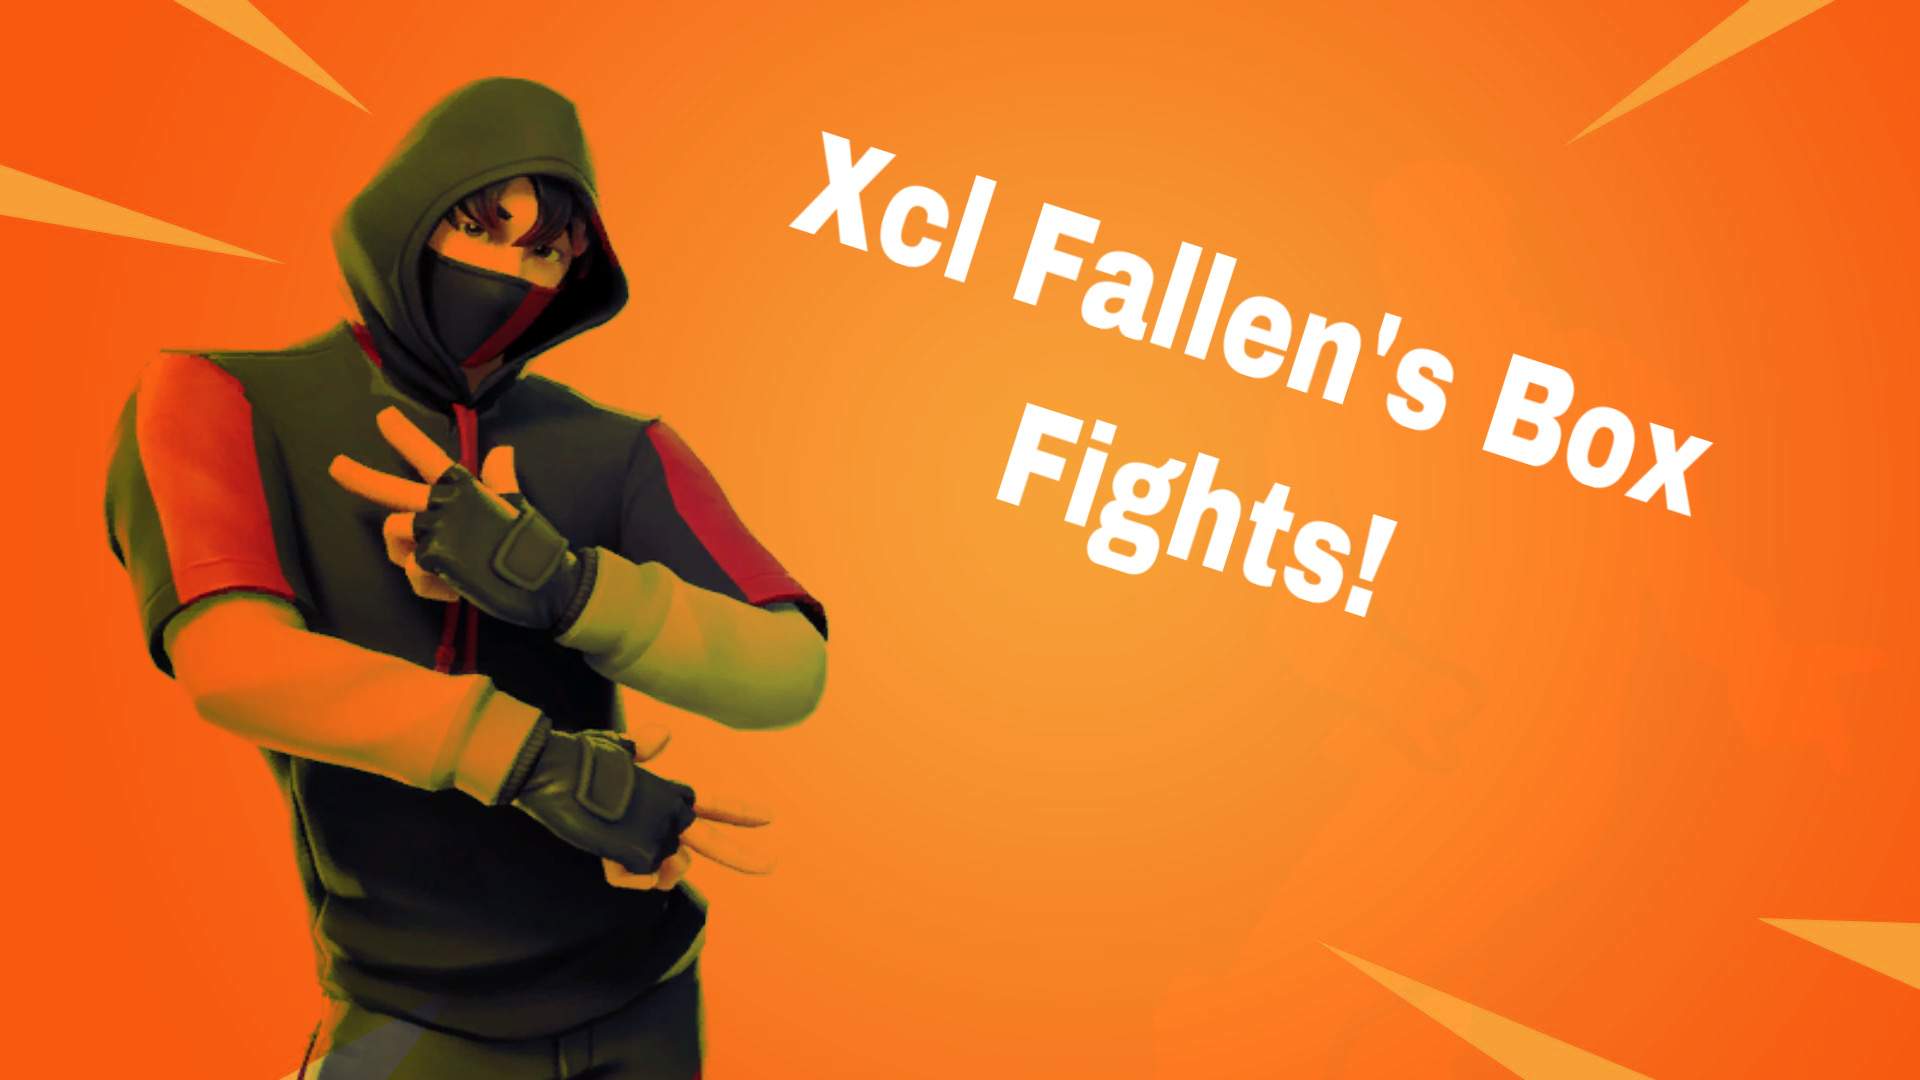 XCL FALLEN BOX FIGHTS